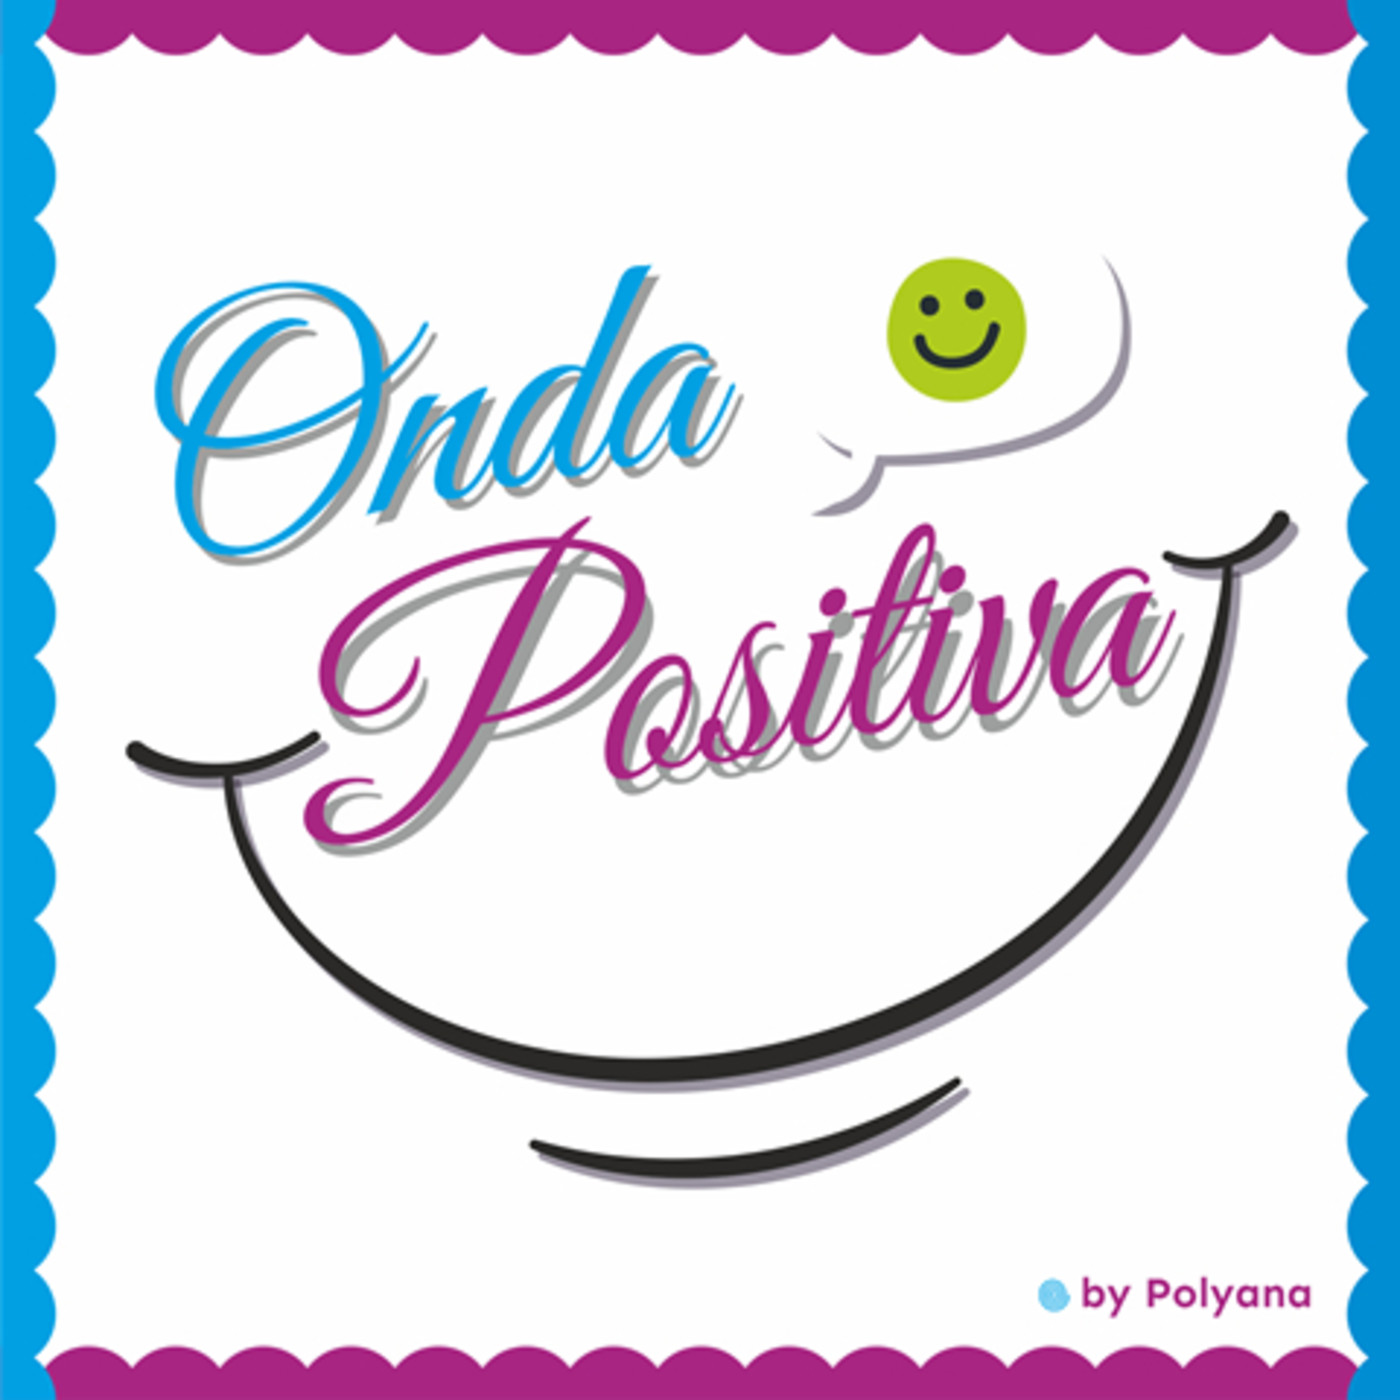 Onda Positiva - Temporada 2018-2019